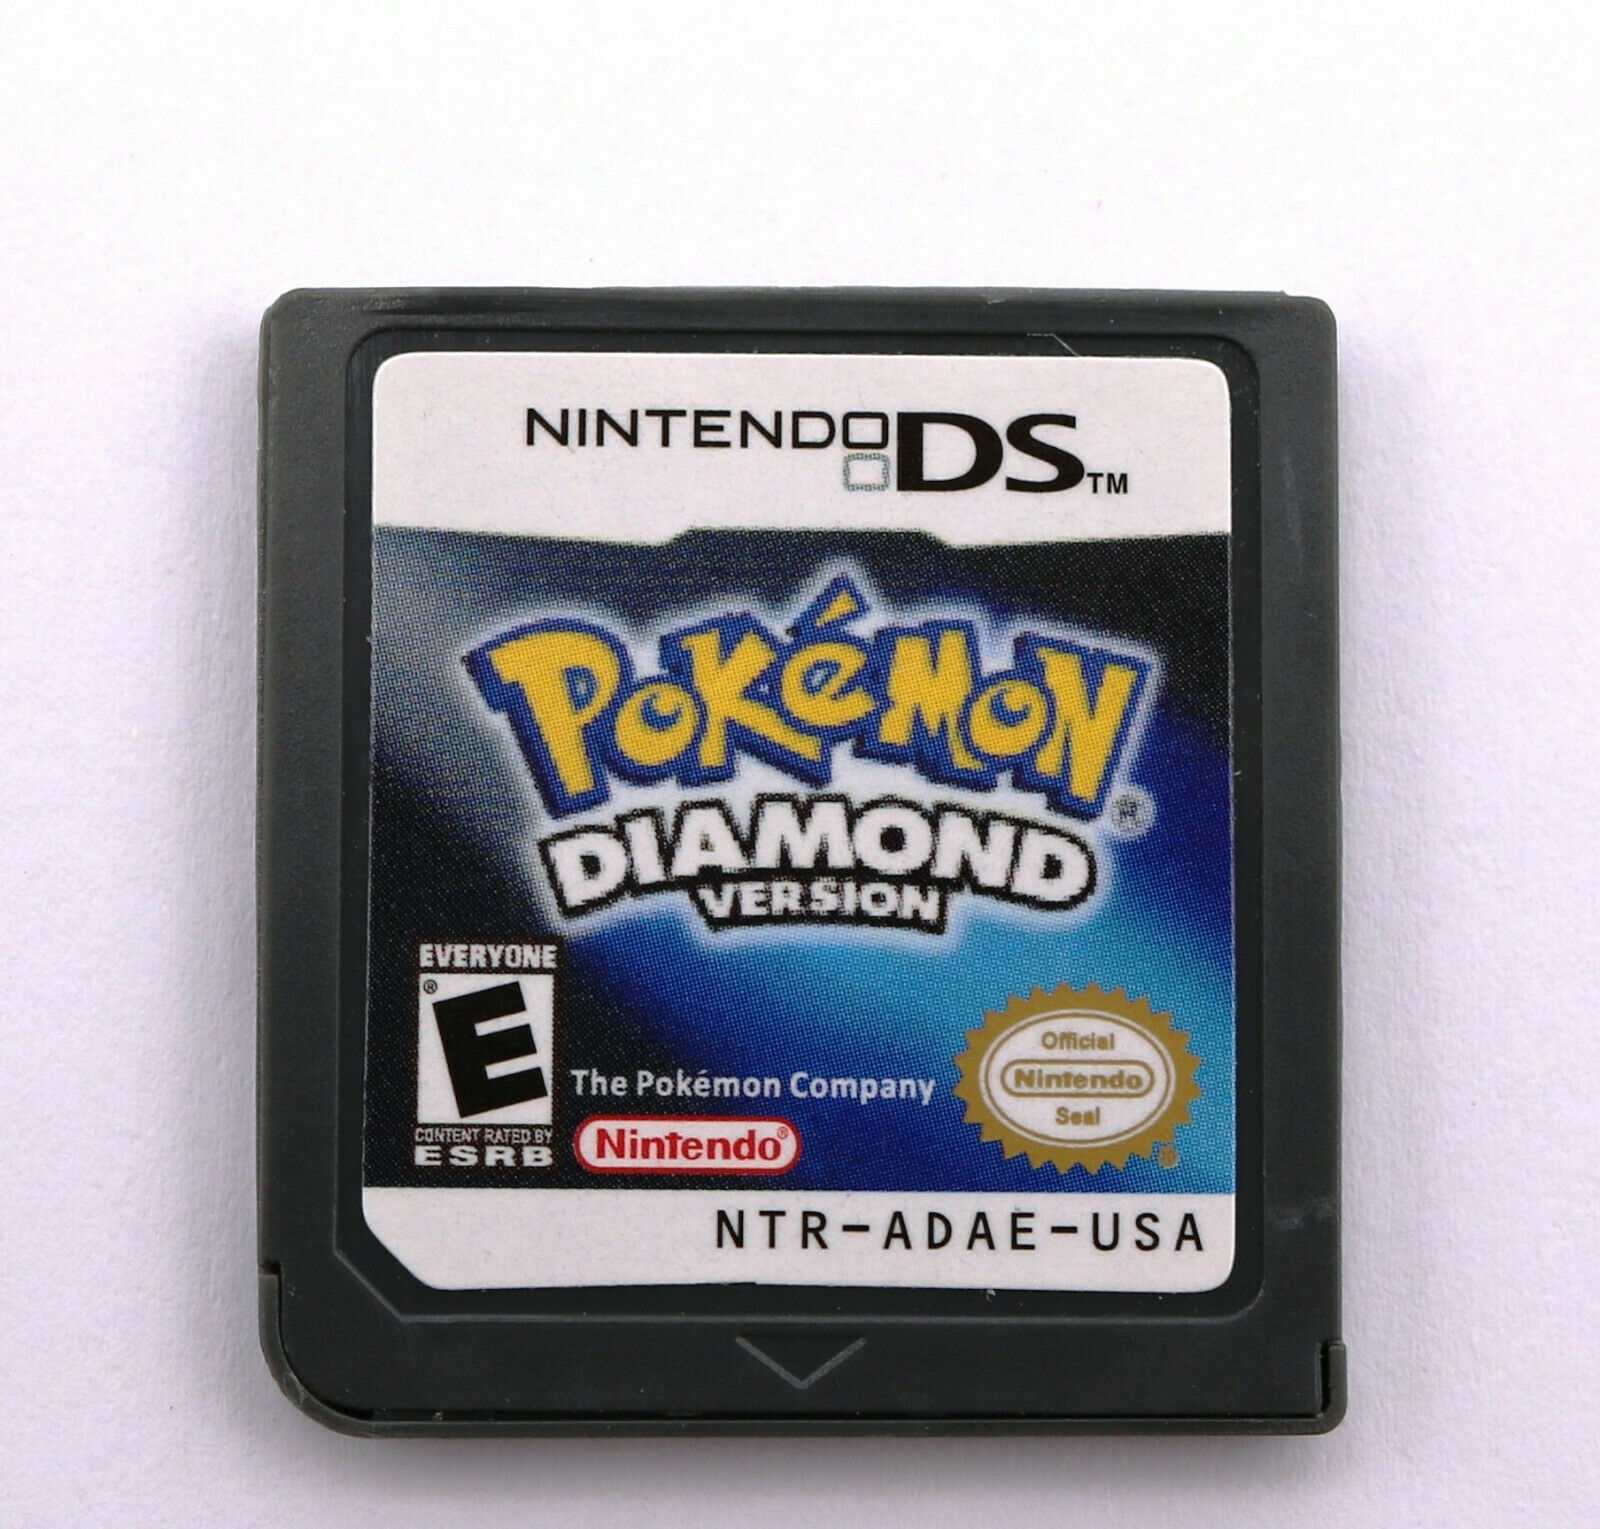 can i play pokemon diamond on 3ds